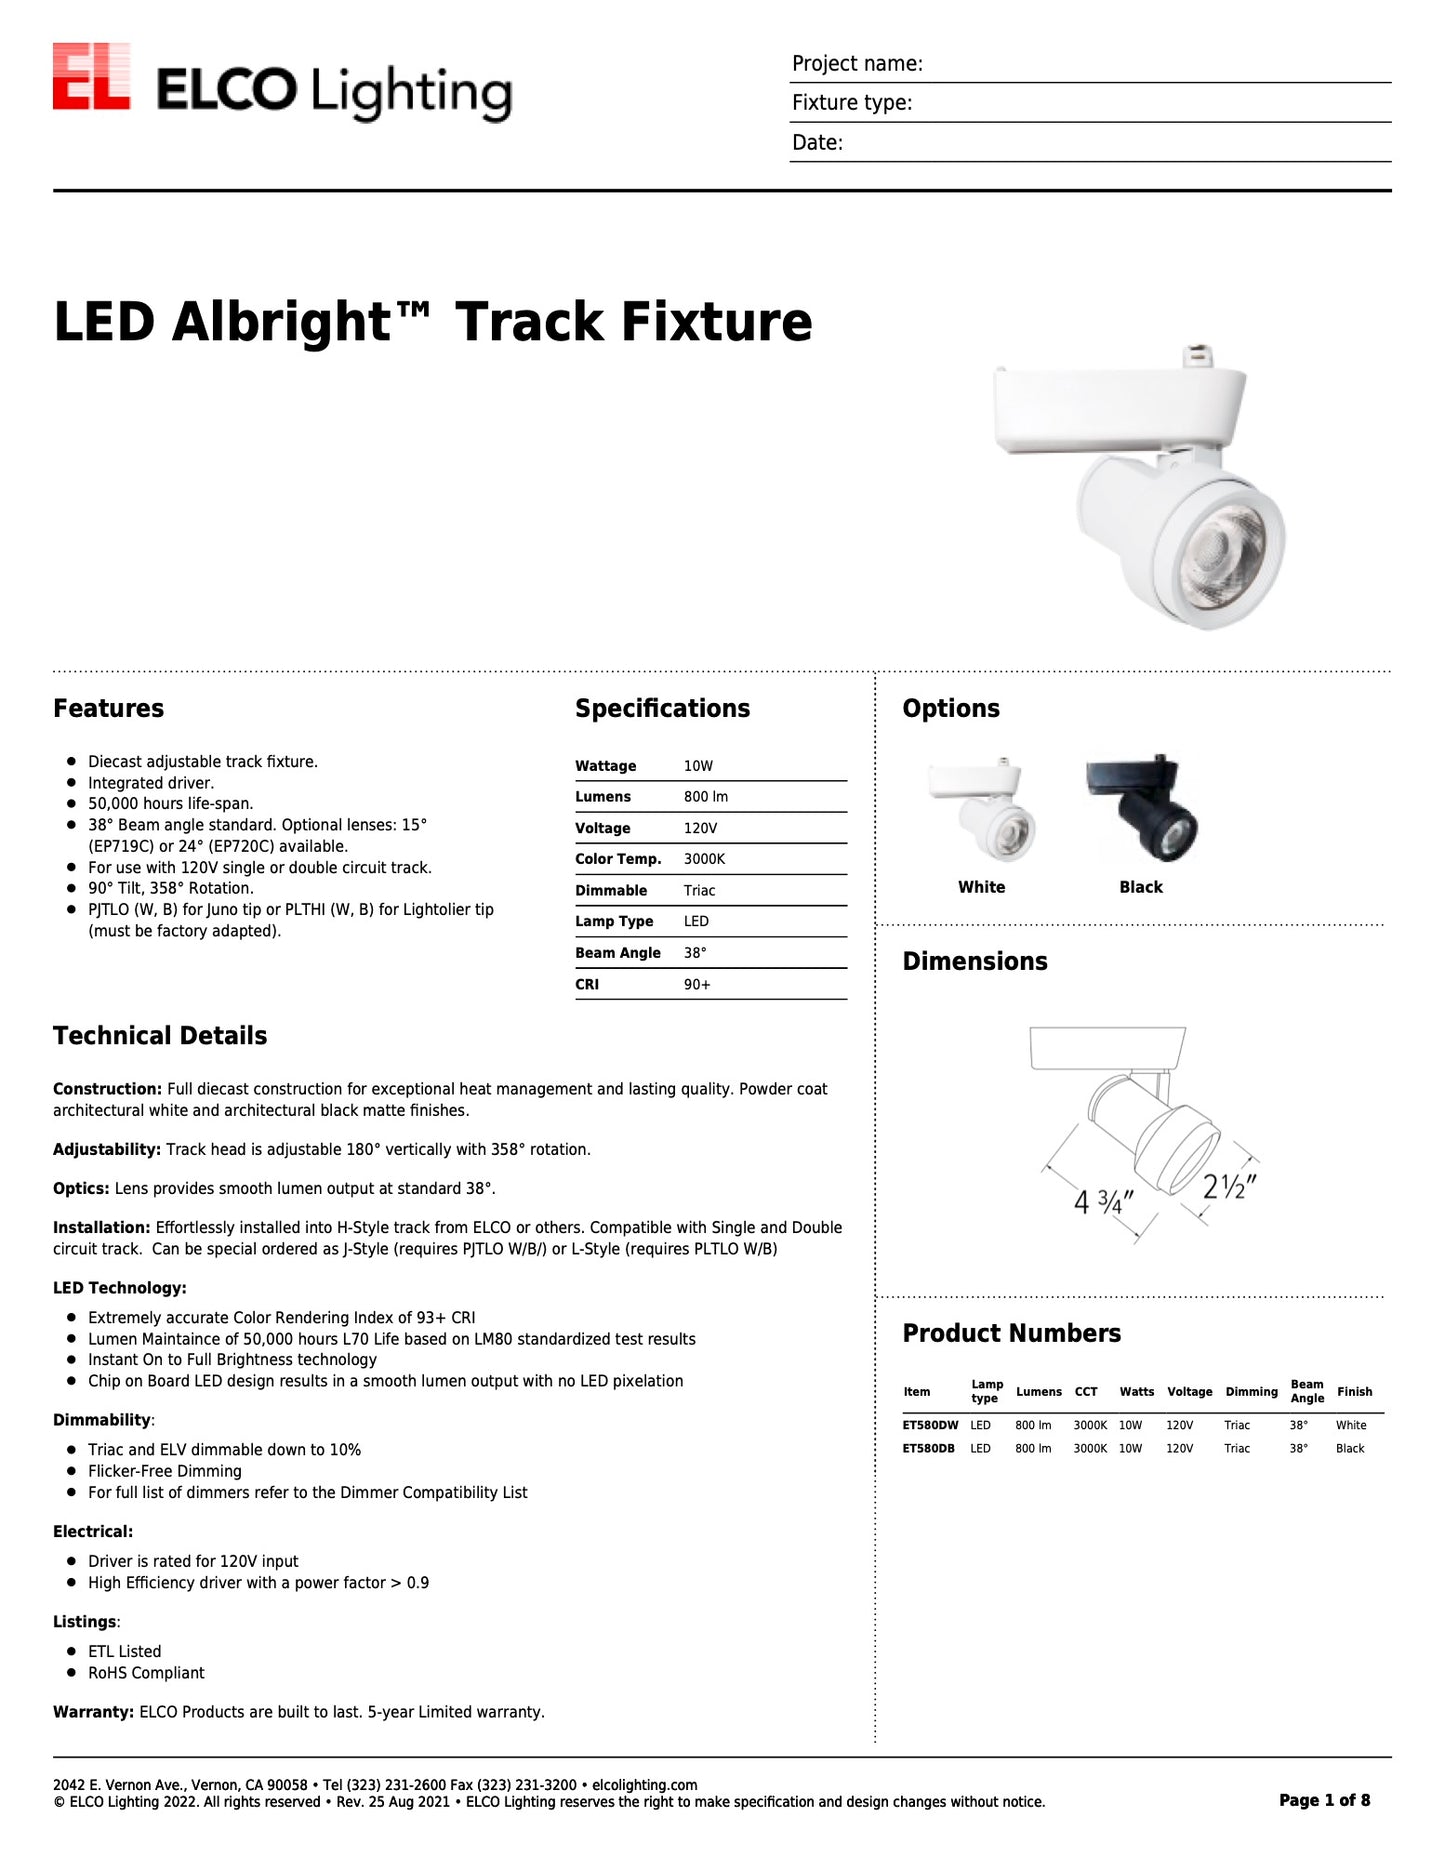 LED Albright Track Fixture